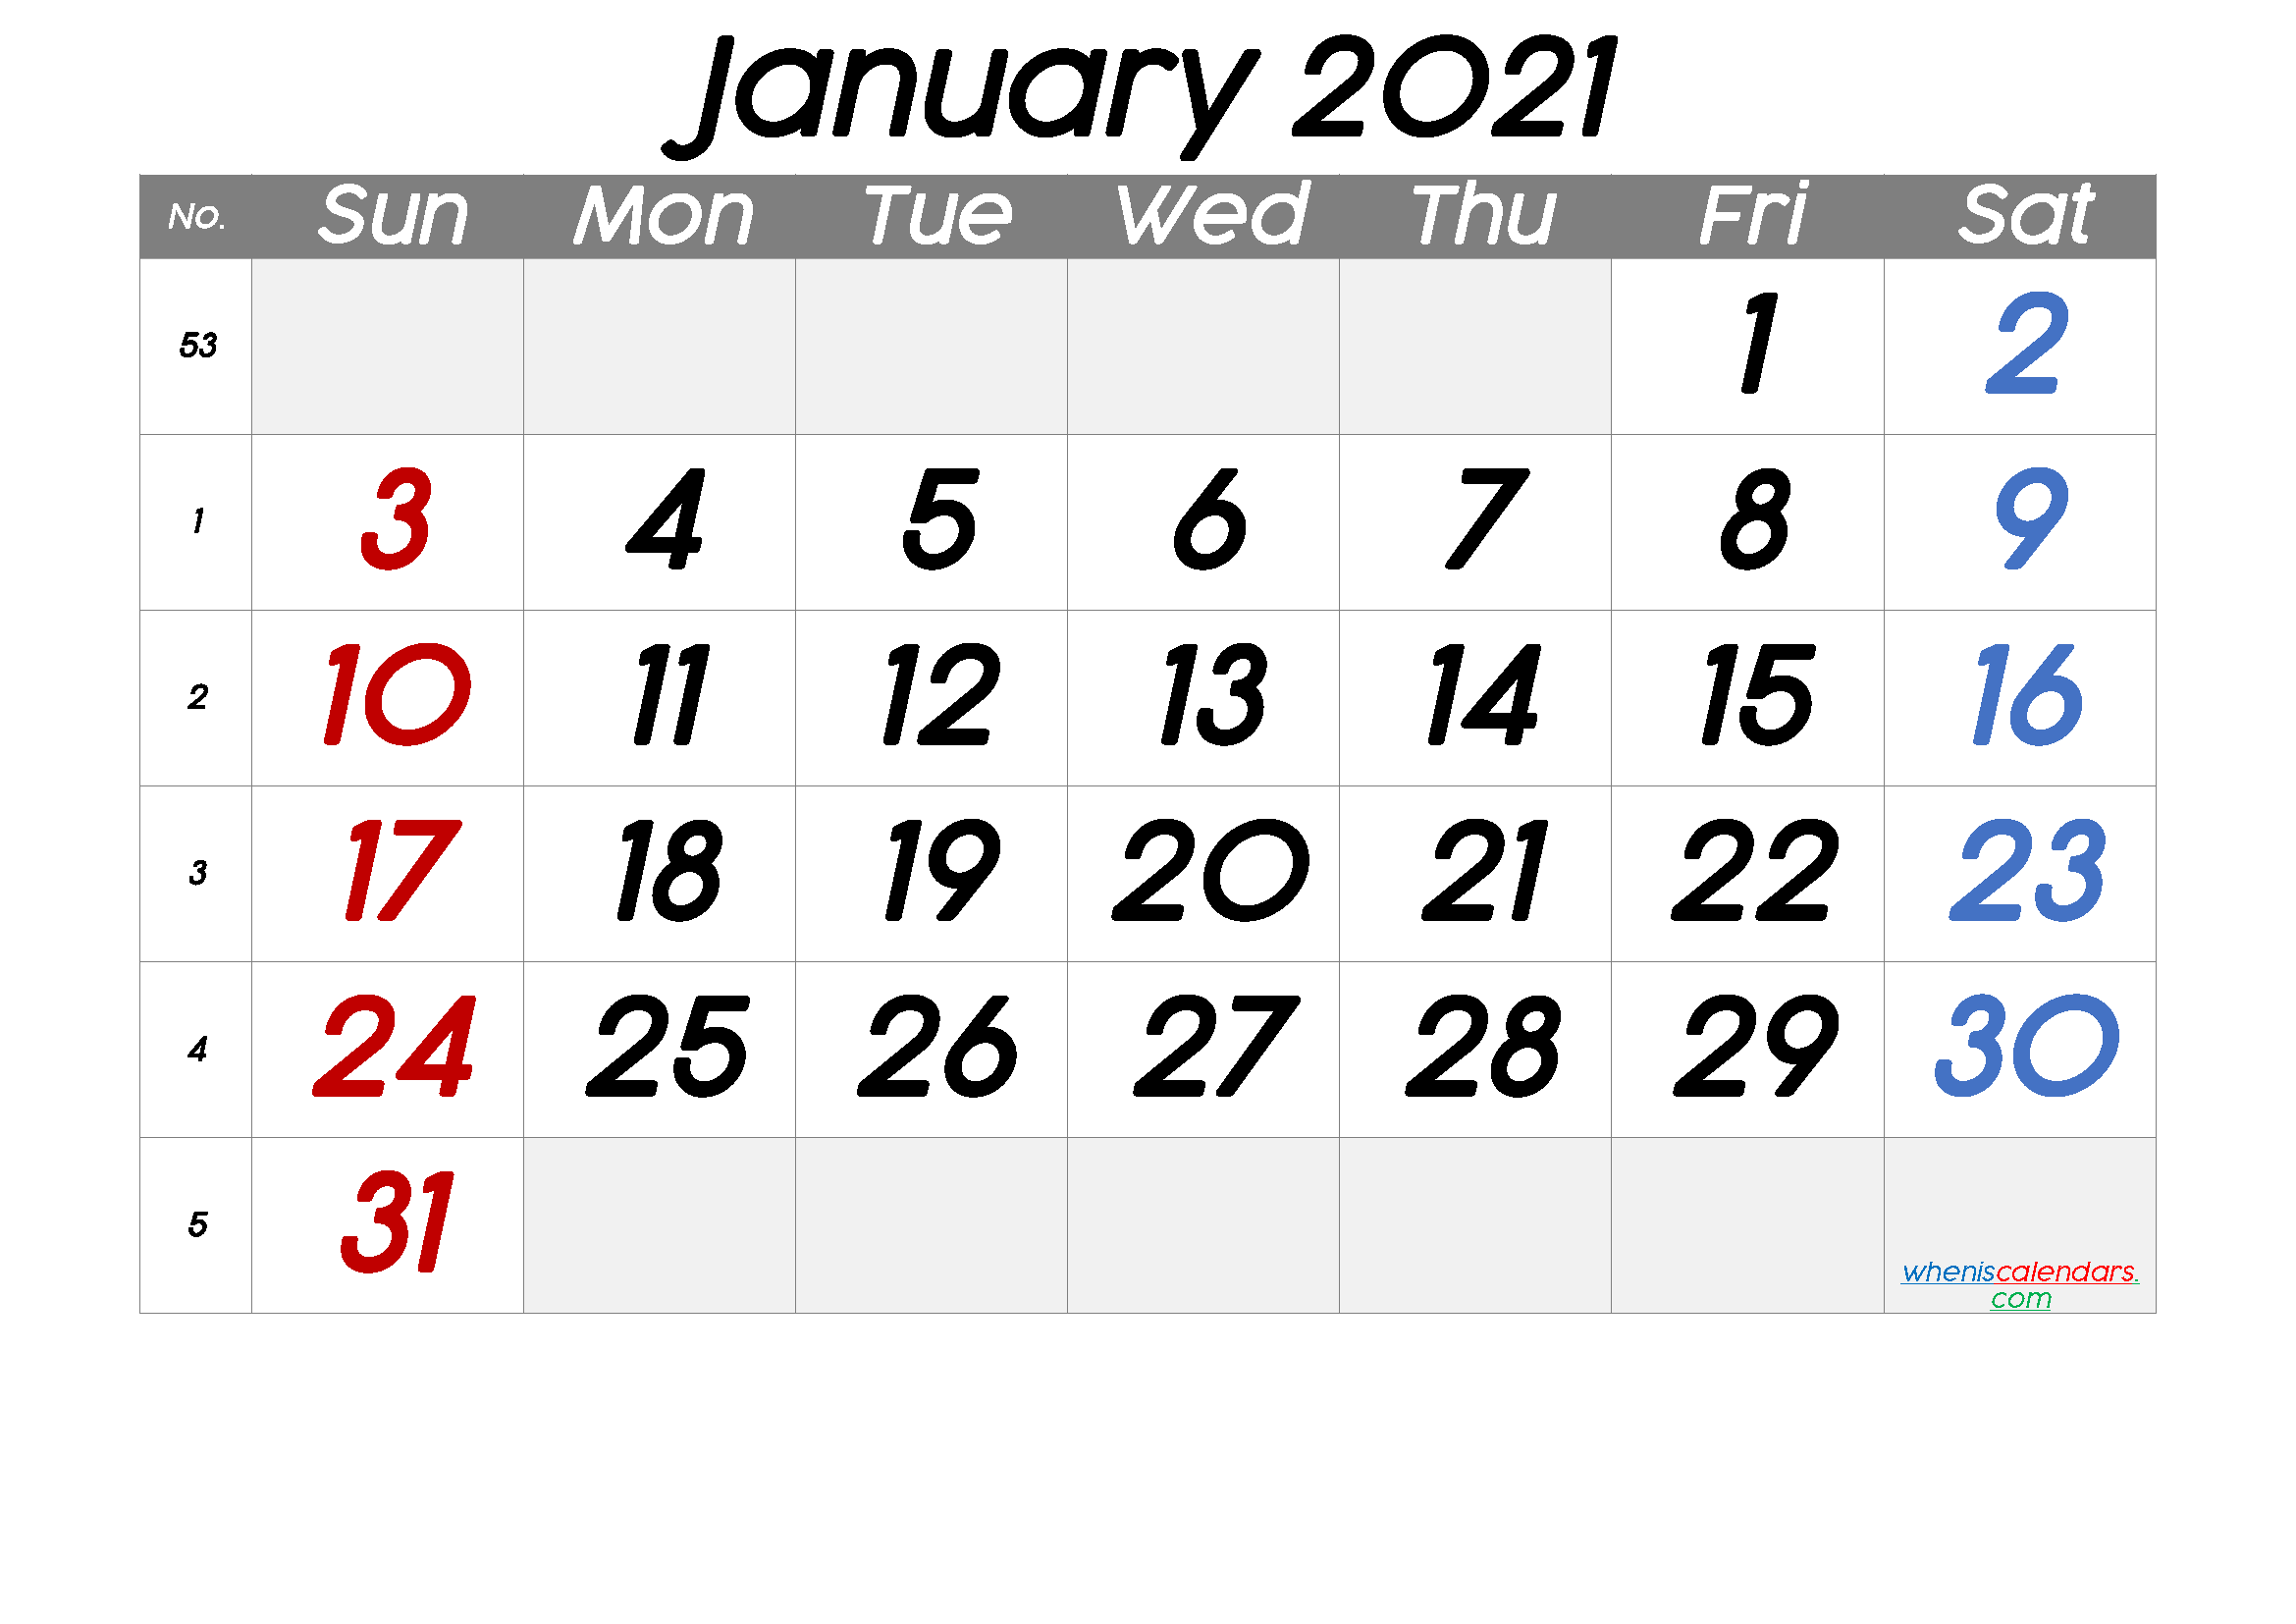 Free Printable January 2021 Calendar with Week Numbers